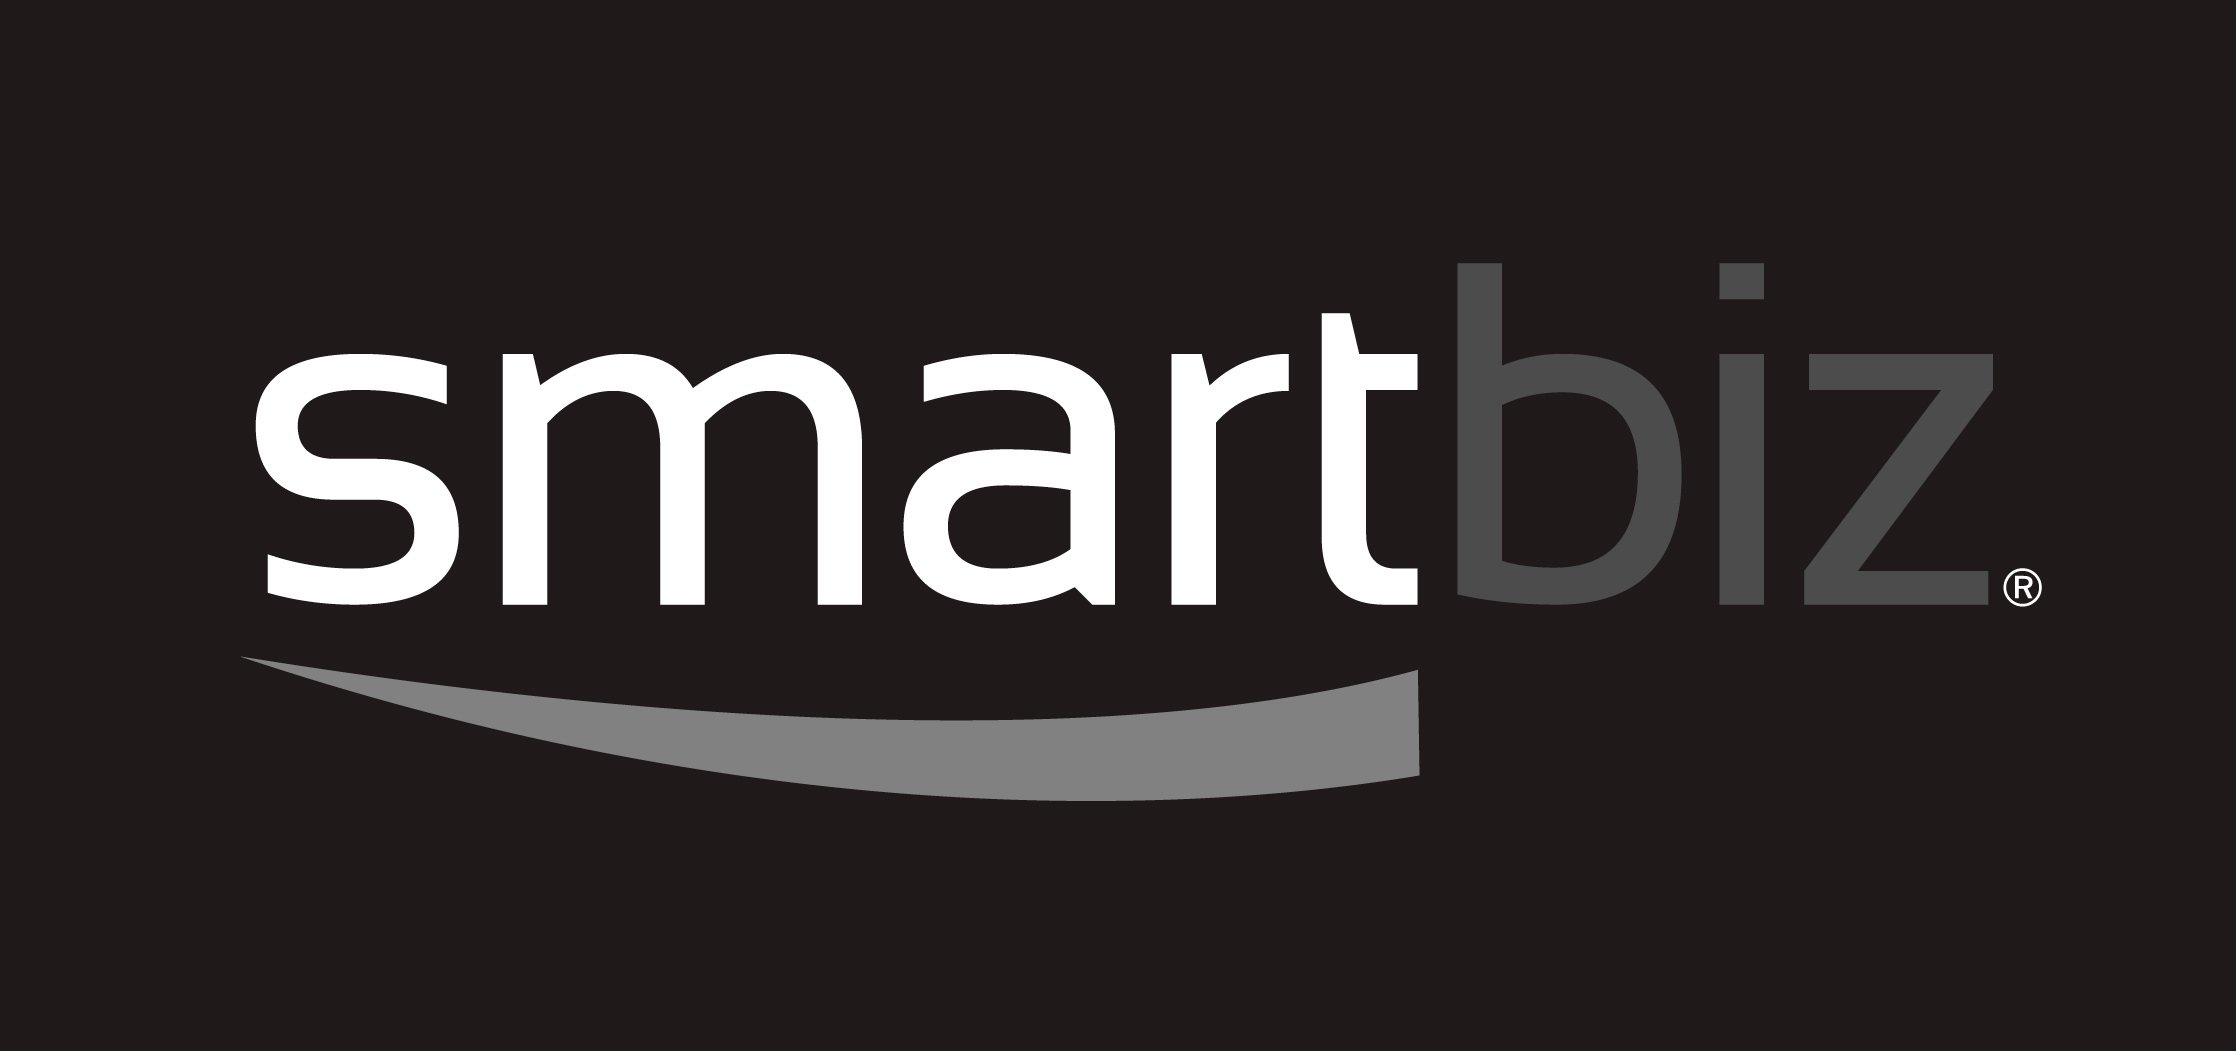 SmartBiz_LOGOS_ALL (3)_Logo Grayscale Reversed